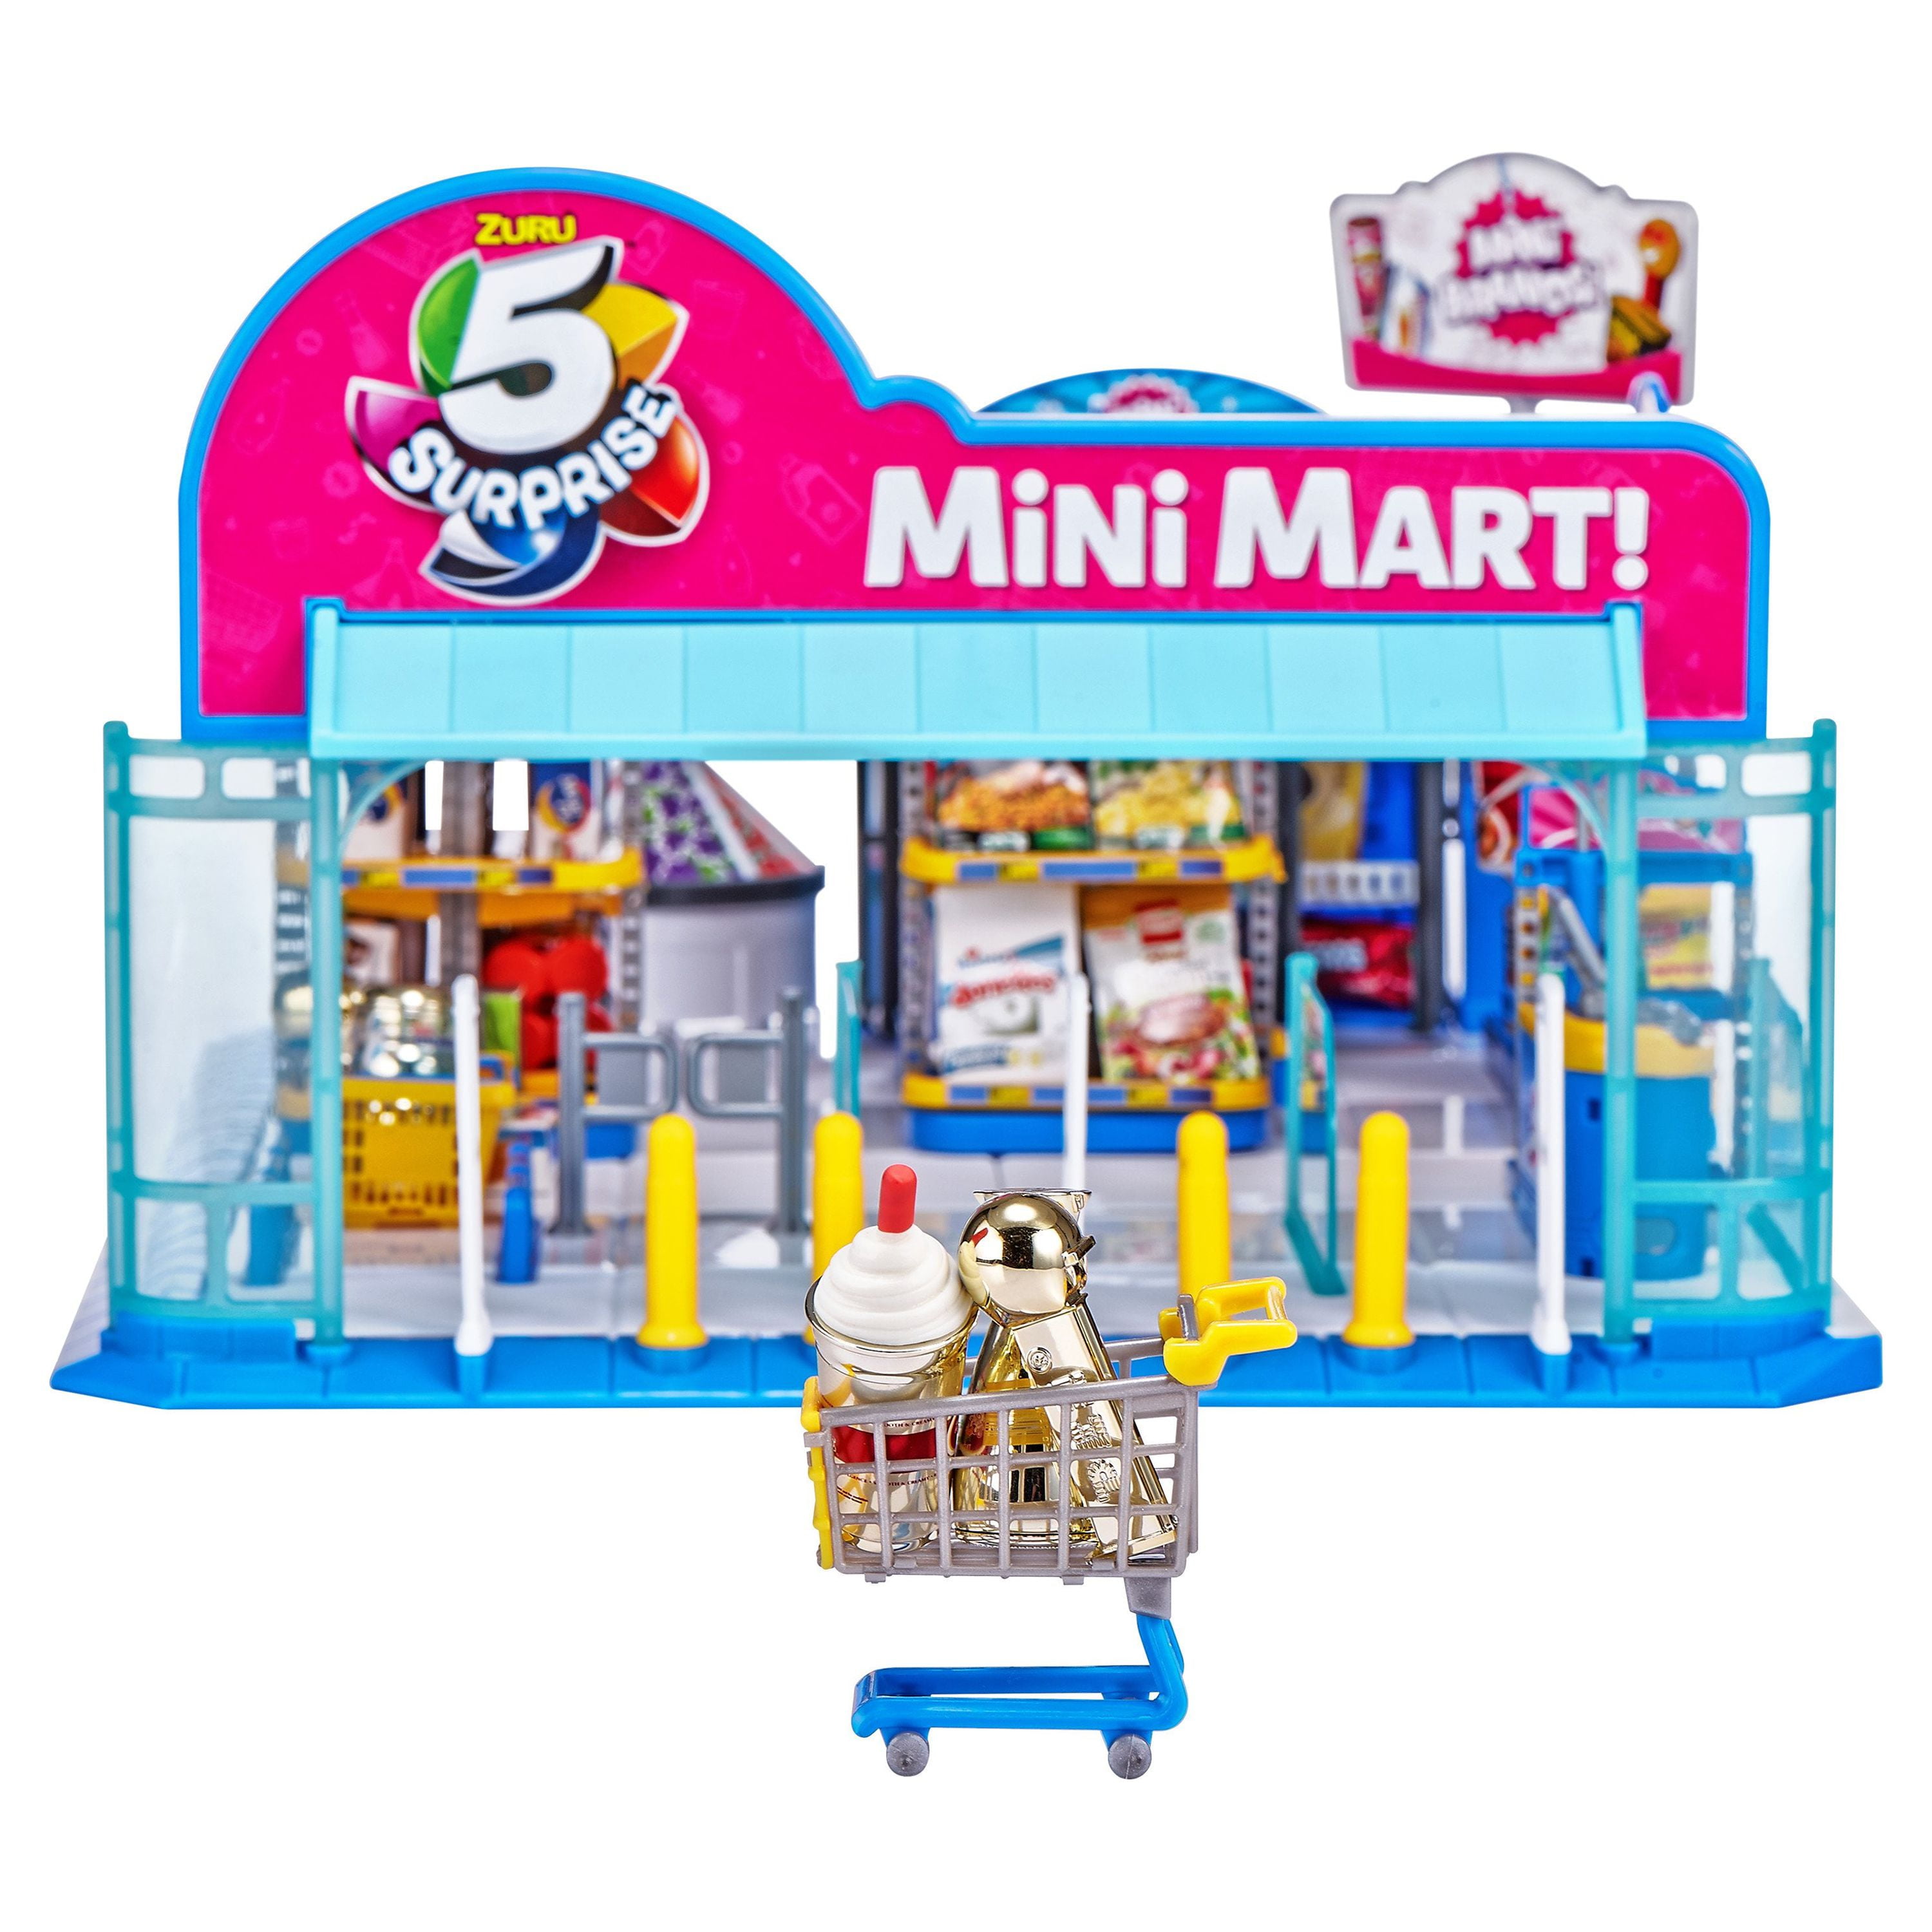 5 Surprise Mini Brands Electronic Mini Mart with 4 Mystery Mini Brands Playset by Zuru, Size: 4.00 x 5.00 x 12.00